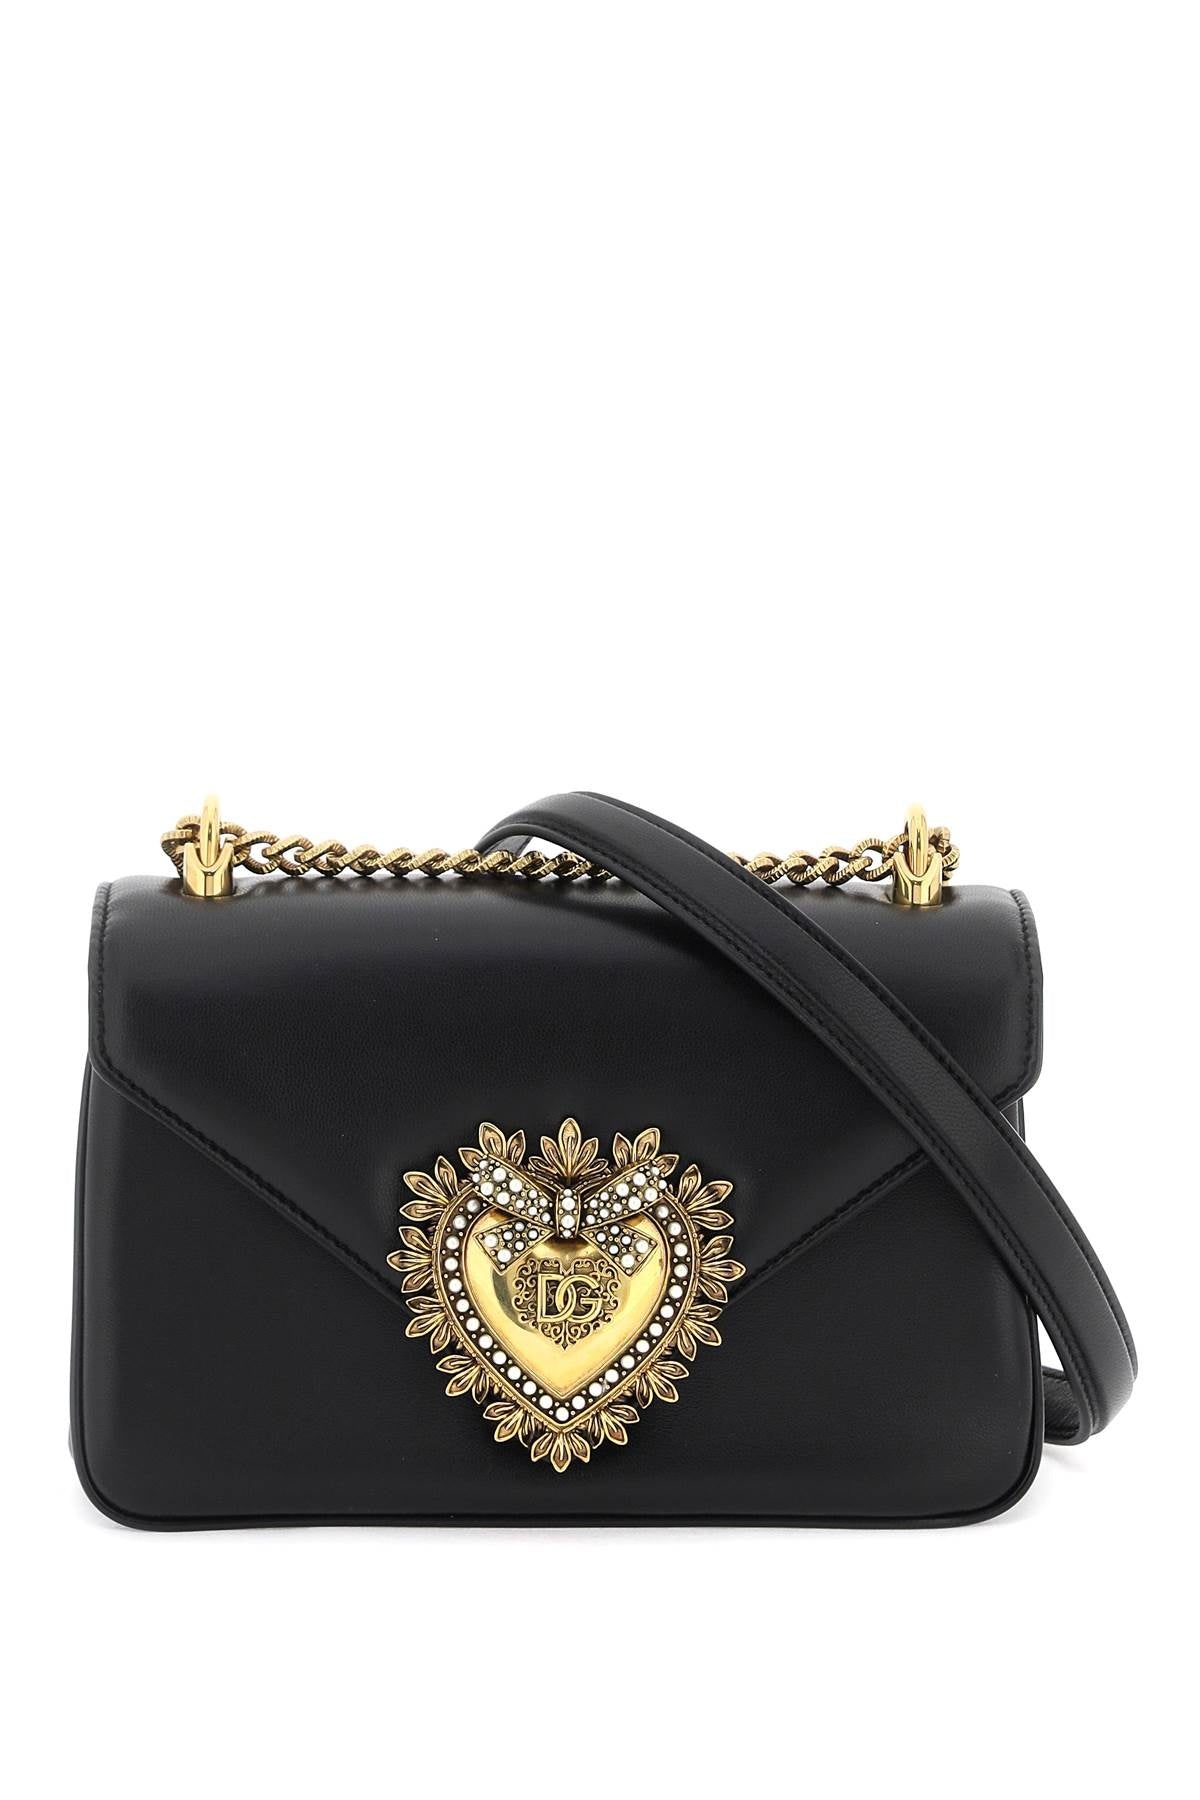 Dolce & Gabbana Devotion Shoulder Bag Women - 1